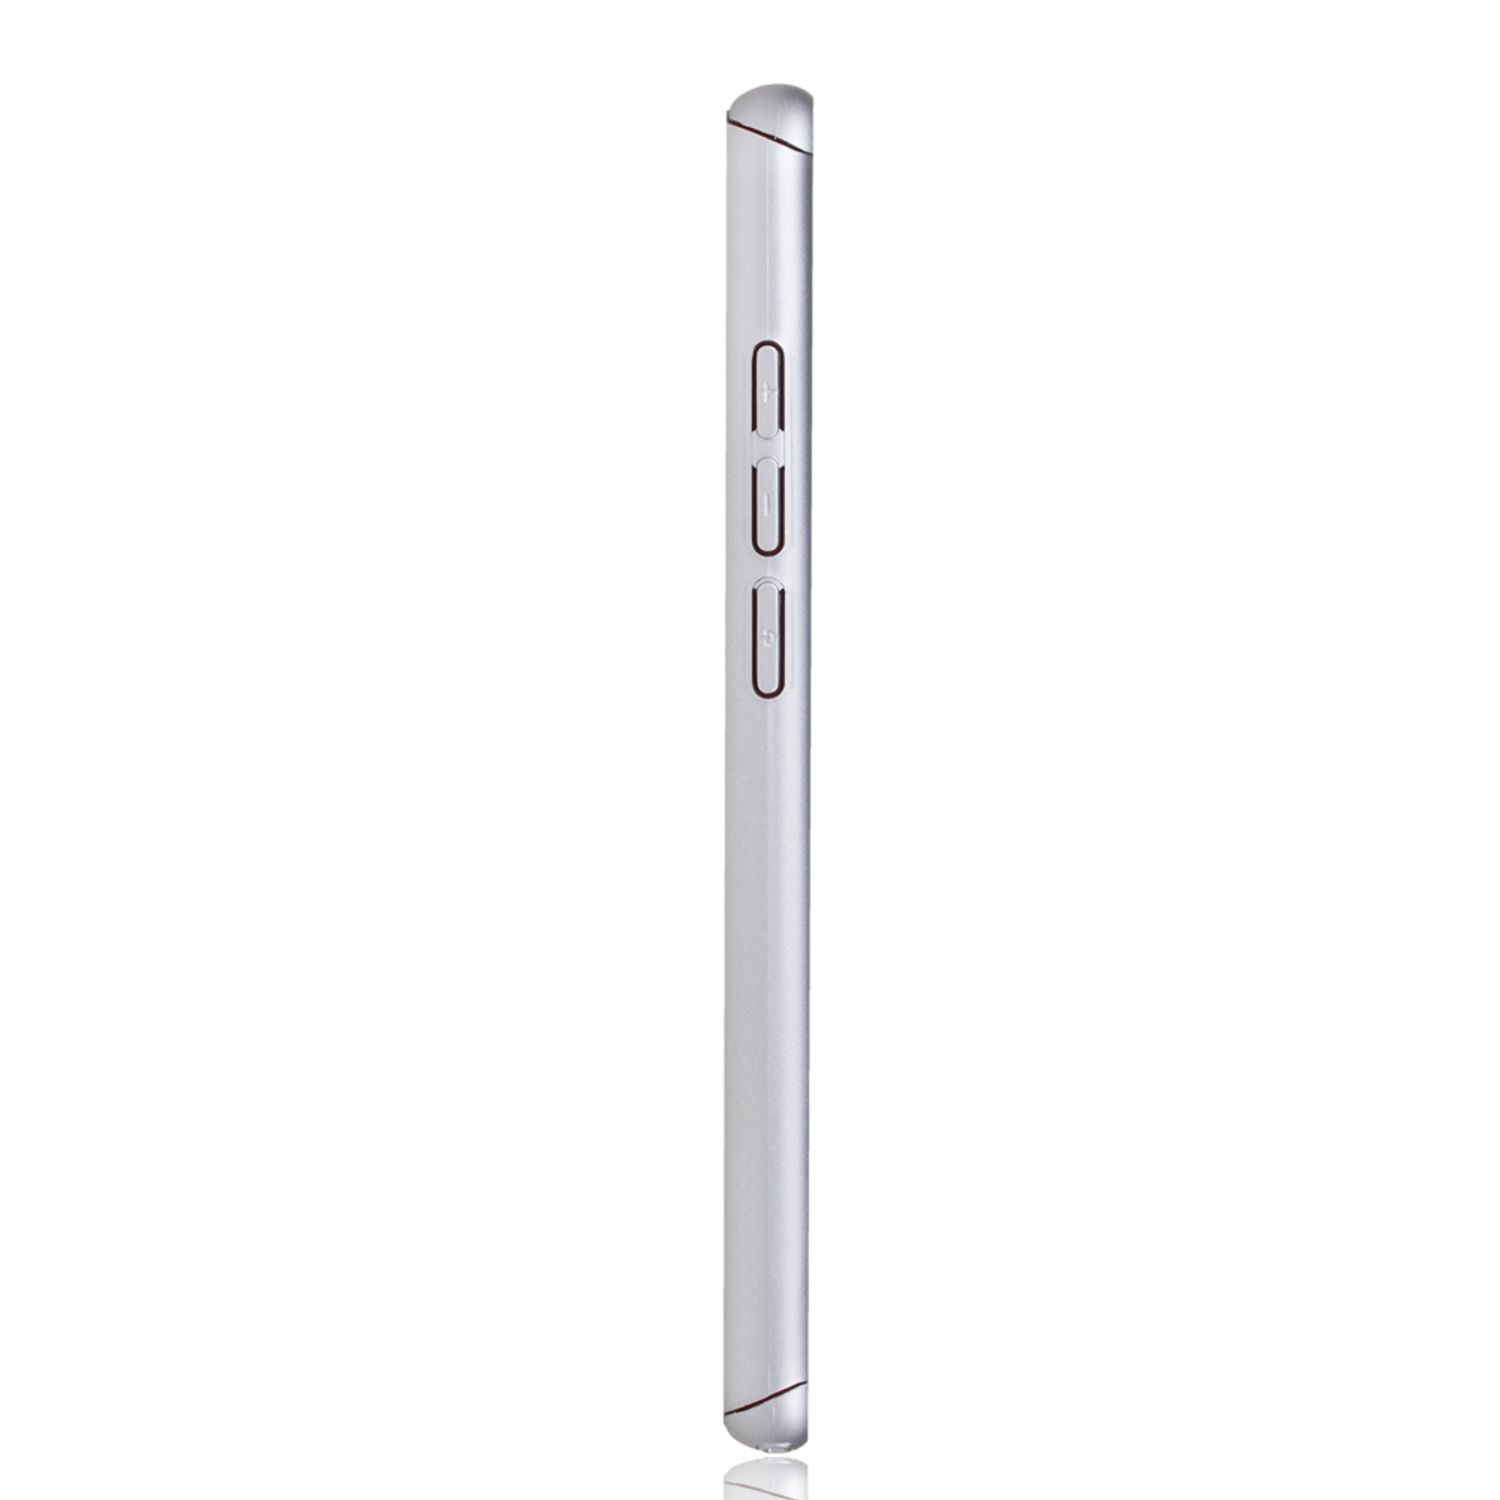 Xiaomi, 7 / Silber KÖNIG Redmi Schutzhülle, Note Pro, Cover, 7 Note Full DESIGN Redmi